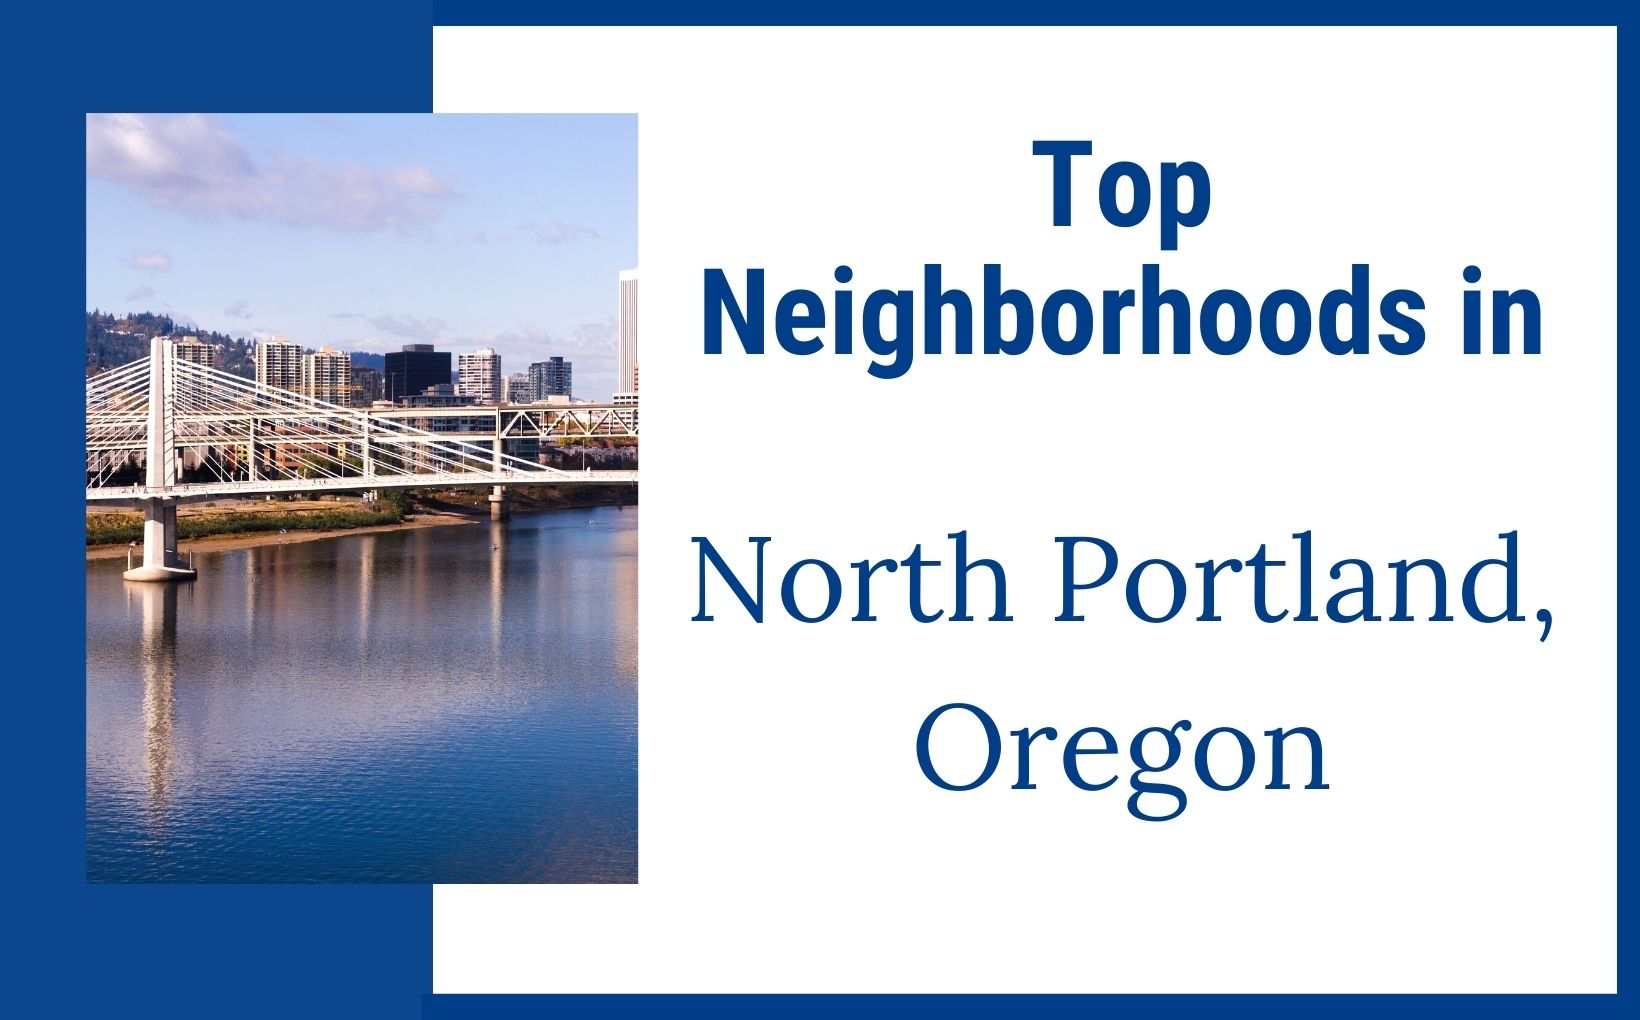 Top Neighborhoods in North Portland Oregon feature image